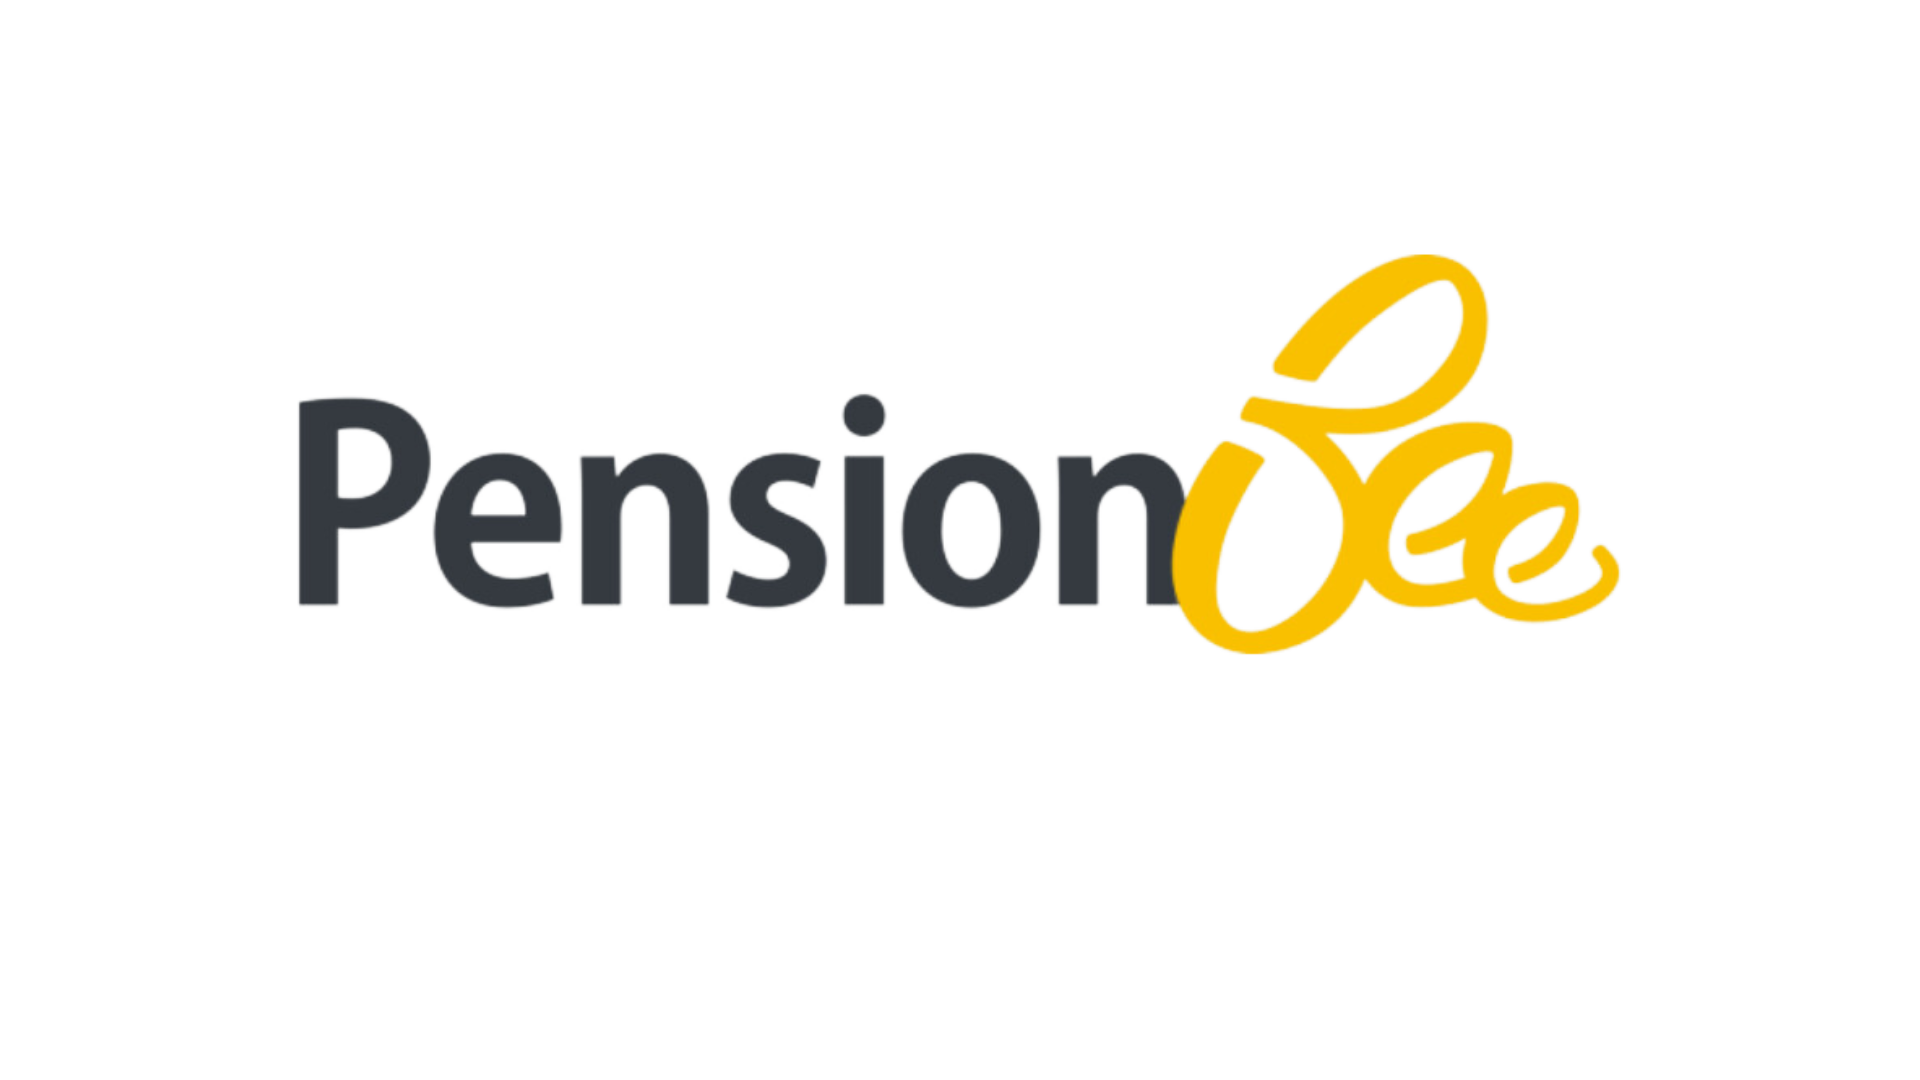 pensionbee logo